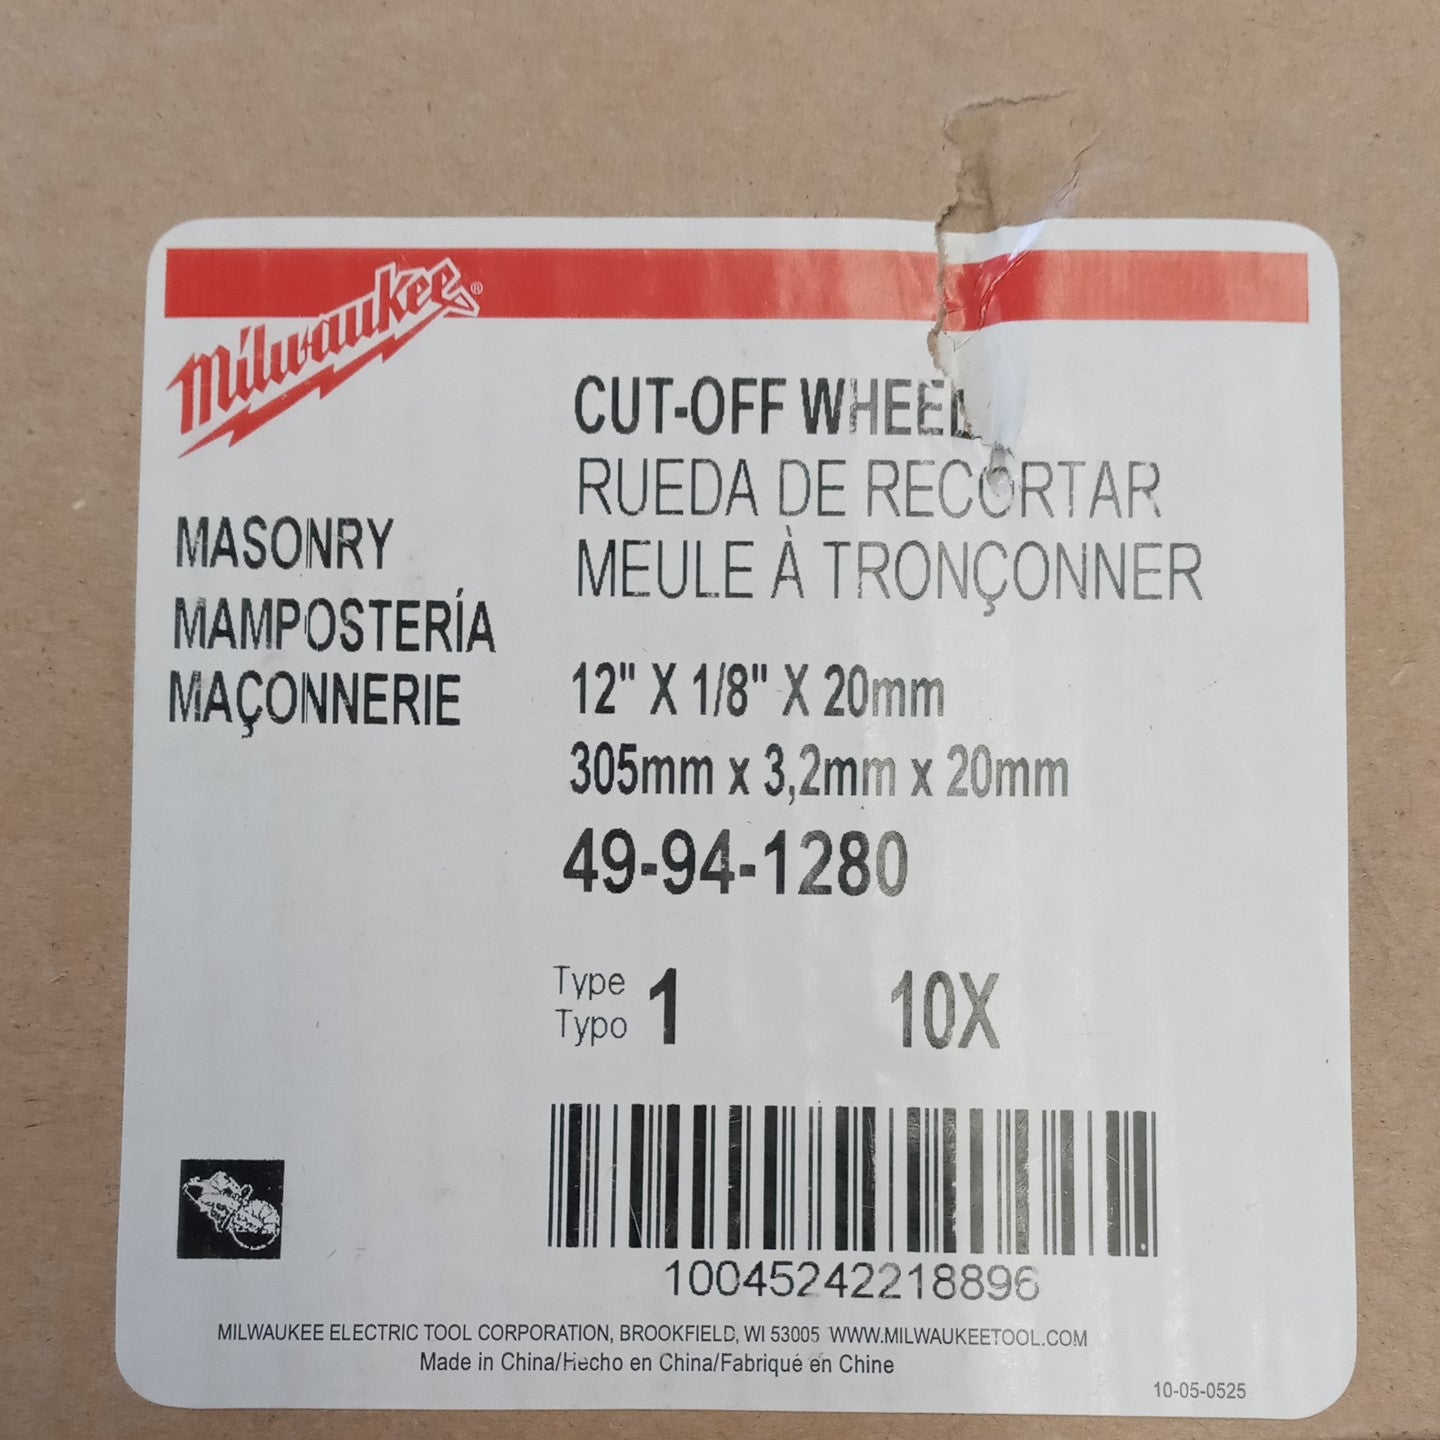 Milwaukee 49-94-1280 Masonry Cut-Off Wheel 12"x1/8"x20mm Type 1, 10pcs